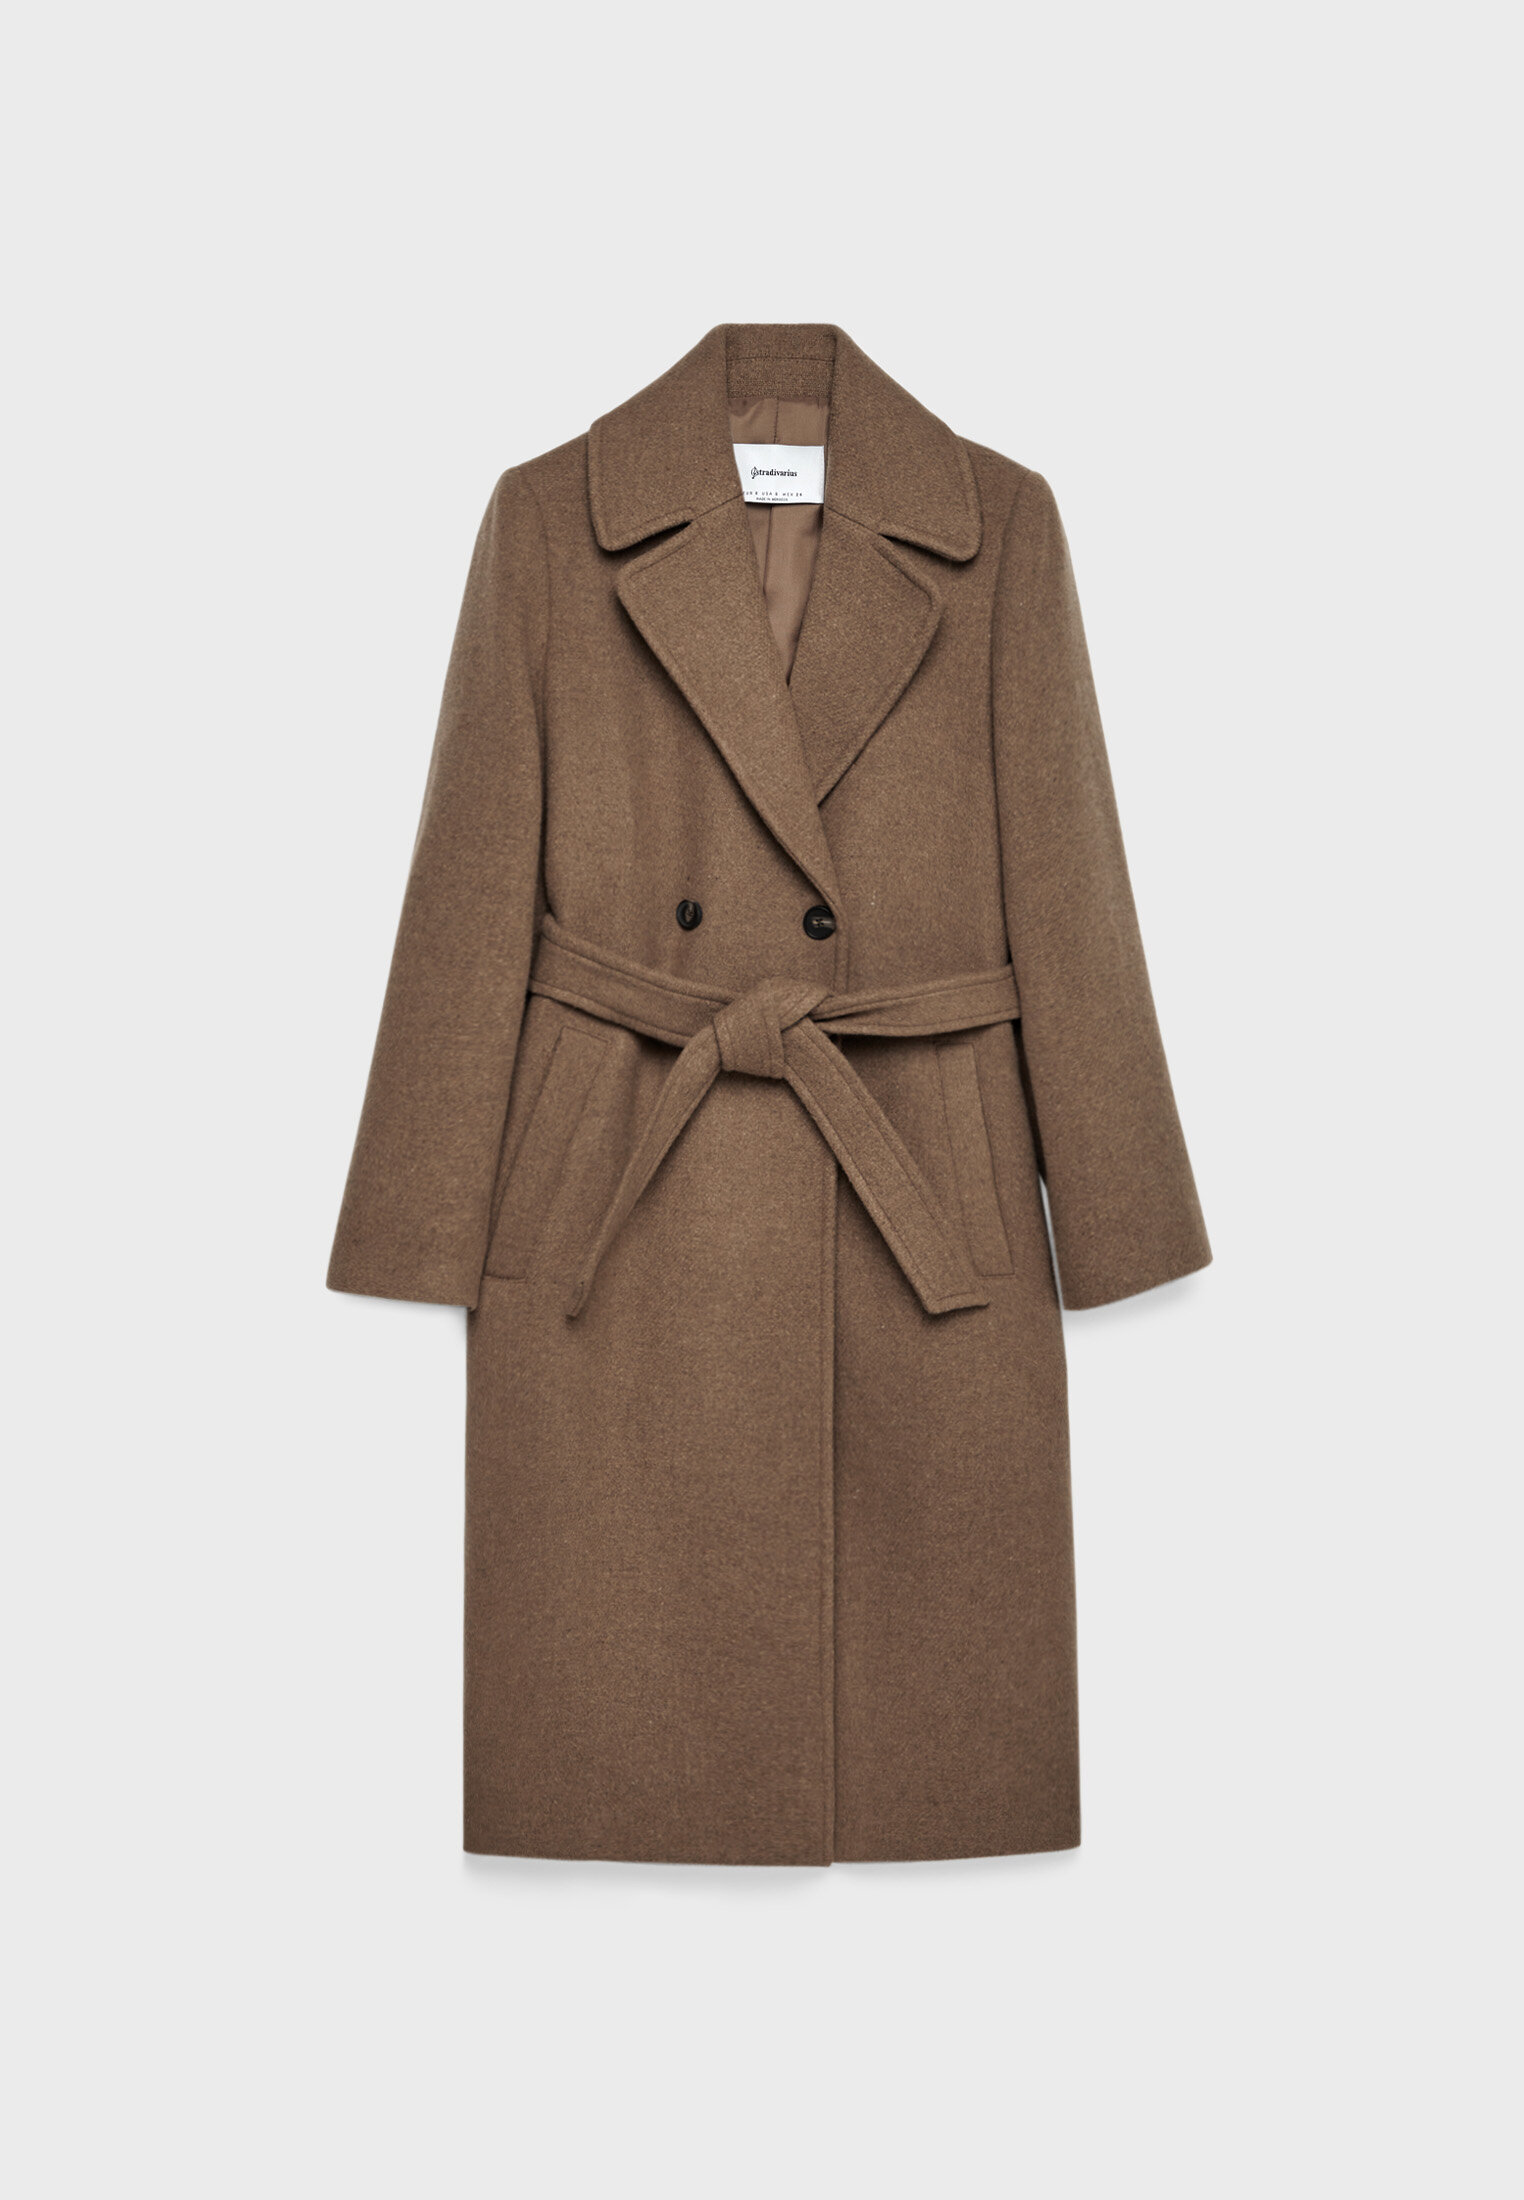 Felt texture coat with belt - Women's fashion | Stradivarius 